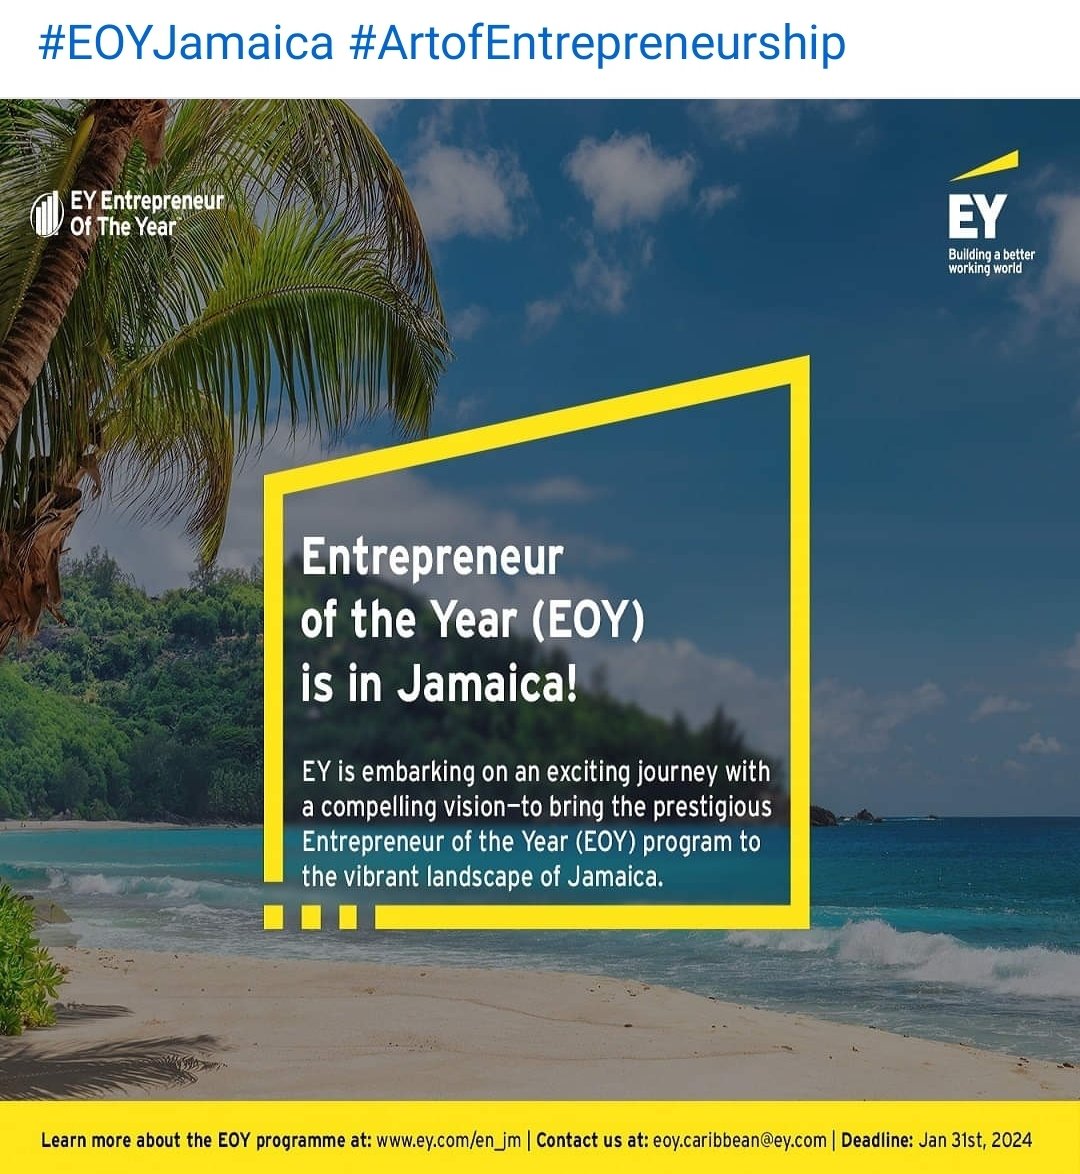 Lets nominate a Jamaican creative entrepreneur for this award!
#theArtofEntrepreneurship
web.cvent.com/event/19057564…